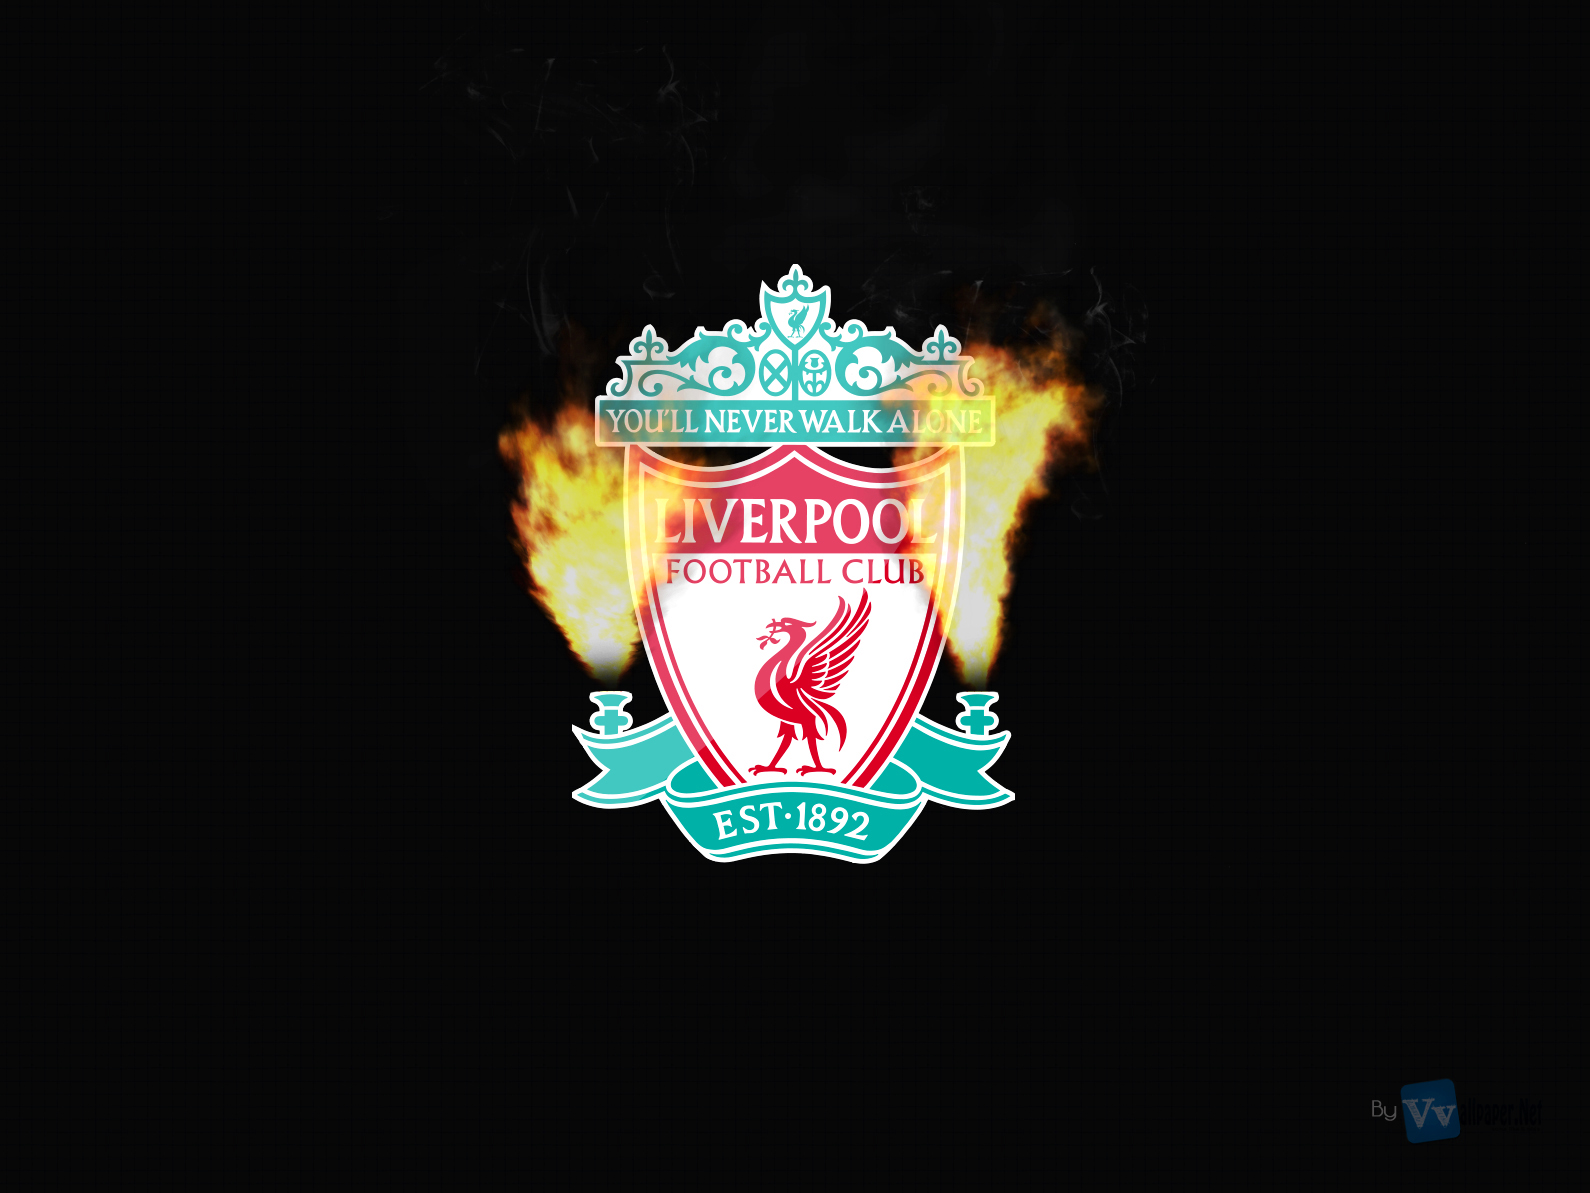 https://blogger.googleusercontent.com/img/b/R29vZ2xl/AVvXsEhCaVM70kiThXs4XvMcf3ZuvB0JUwDvT1zaGLPzodKFwrOsqkKqjKQA7EzVfOGEDyYW5ObkmntaAsmOSdaIN4IWLt6OdO4JHj8Obk9Epny1MwHWANW0WgGiVcum6qz_J4Vmk4BdIj7AEDk/s1600/Liverpool-Football-Club-Logo-Flames-HD-Wallpaper_by_Vvallpaper.Net.jpg